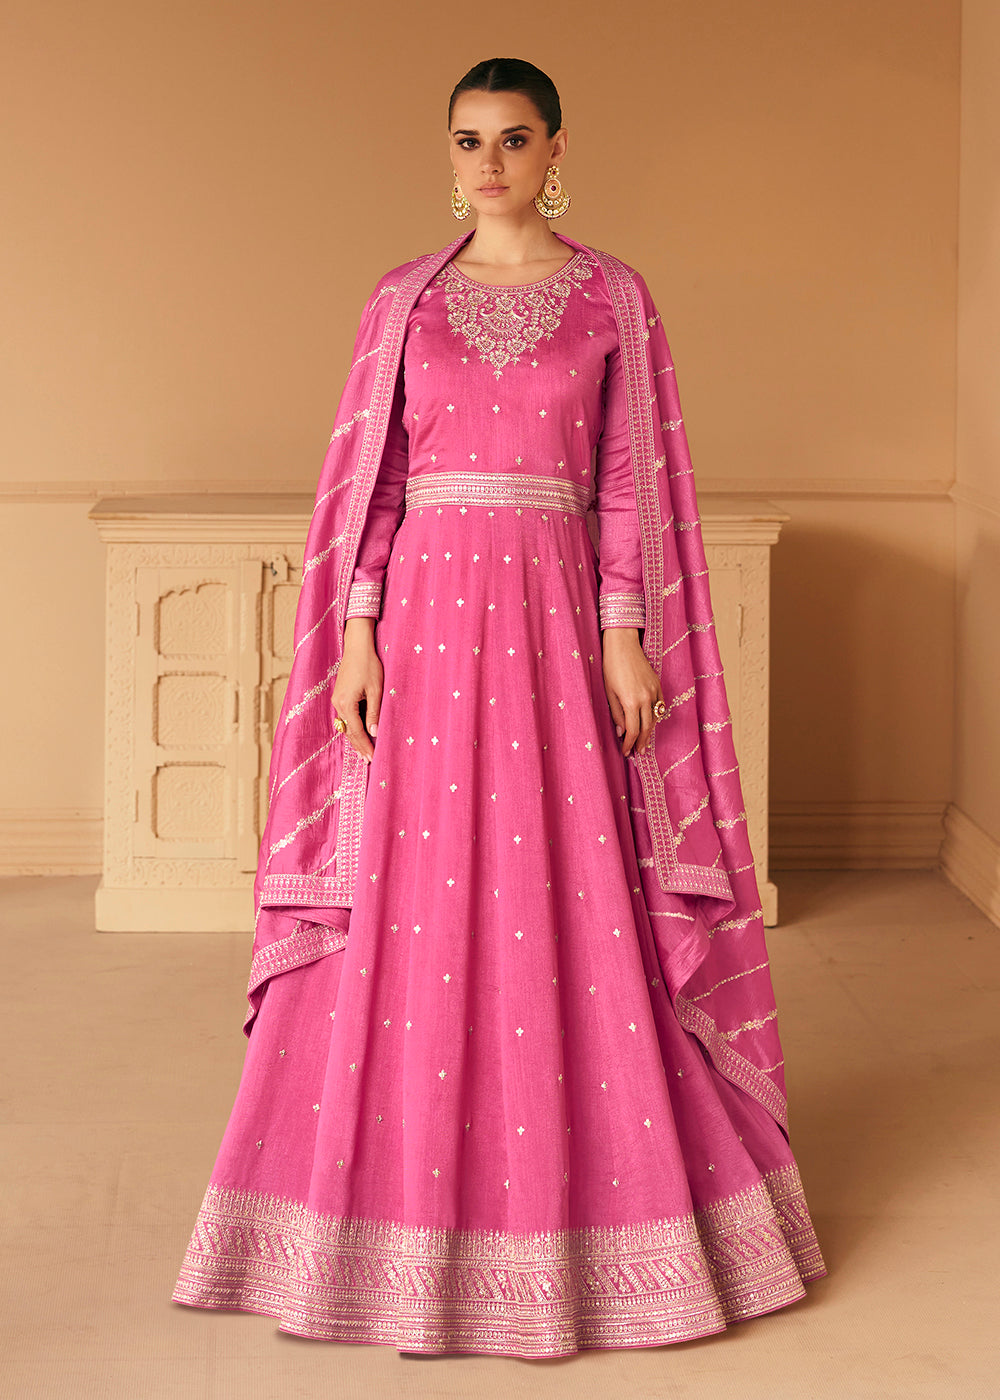 Buy Now Embroidered Pink Premium Silk Sangeet Wear Anarkali Suit Online in USA, UK, Australia, New Zealand, Canada & Worldwide at Empress Clothing. 